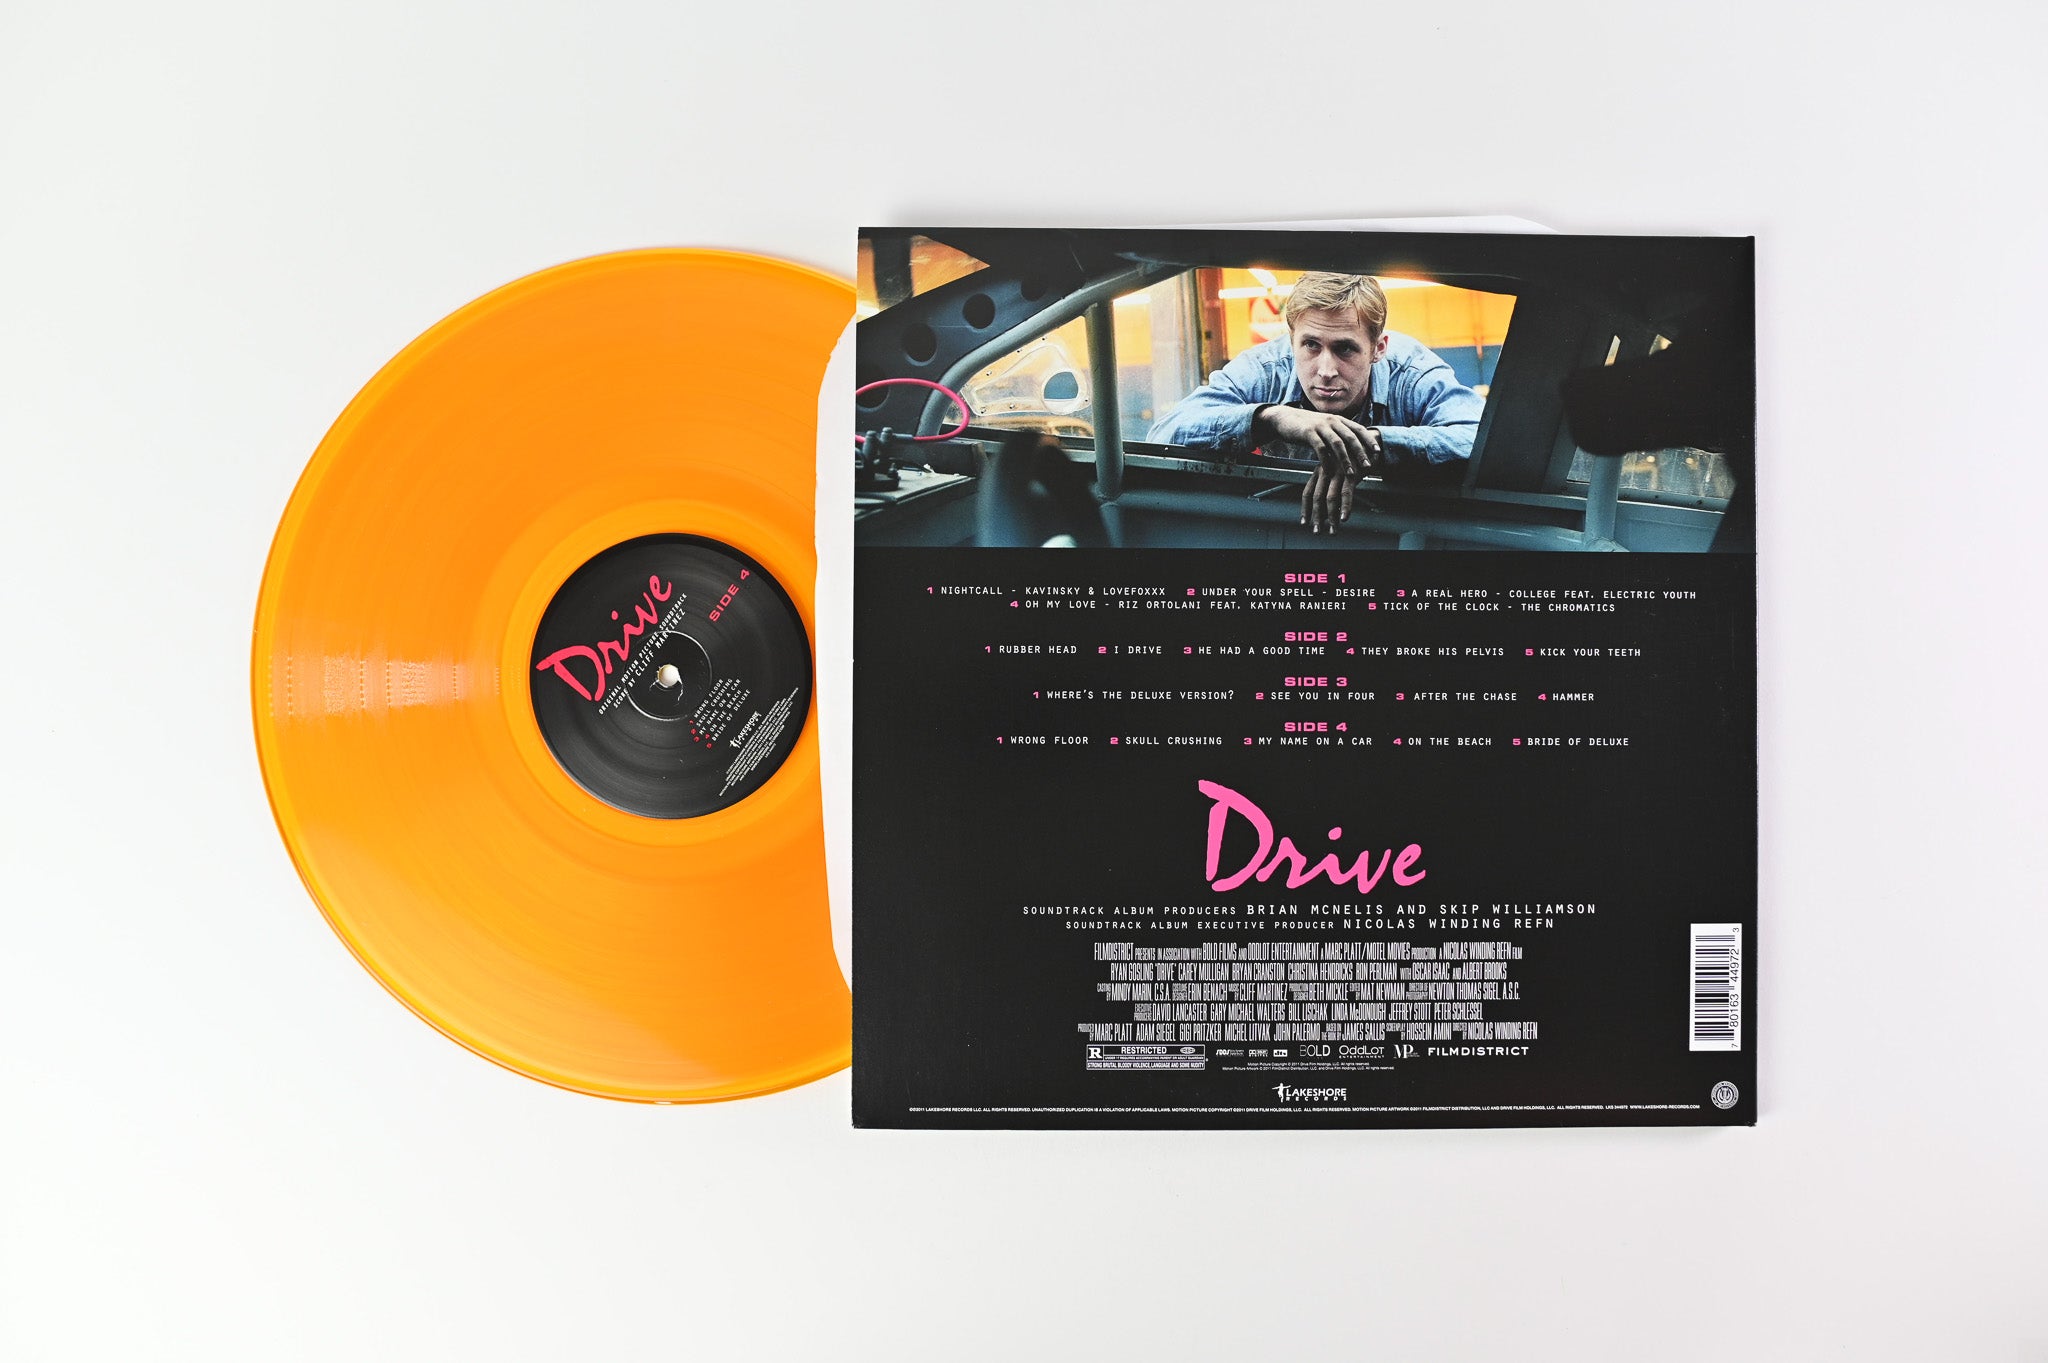 Cliff Martinez - Drive (Original Soundtrack) on Lakeshore Ltd Gold Transparent Reissue